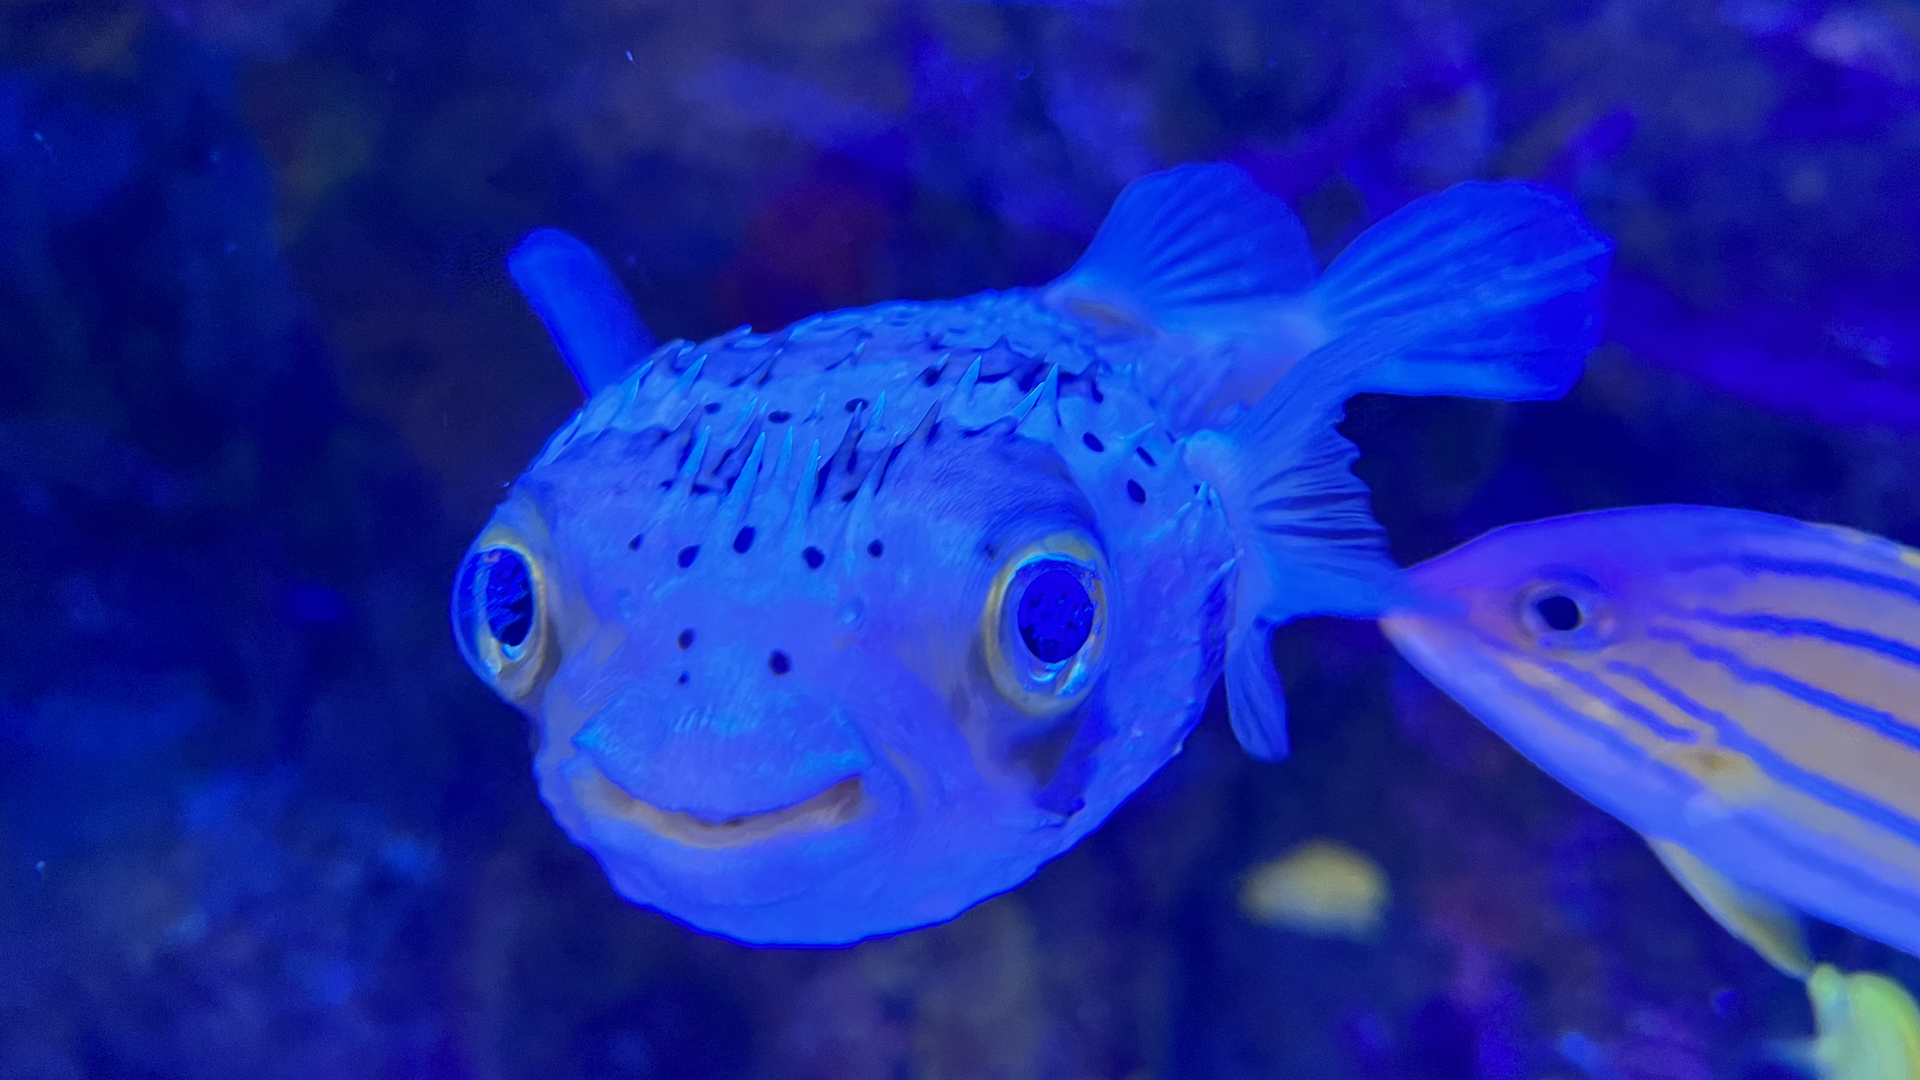 A fish in an aquarium smiling at the camera